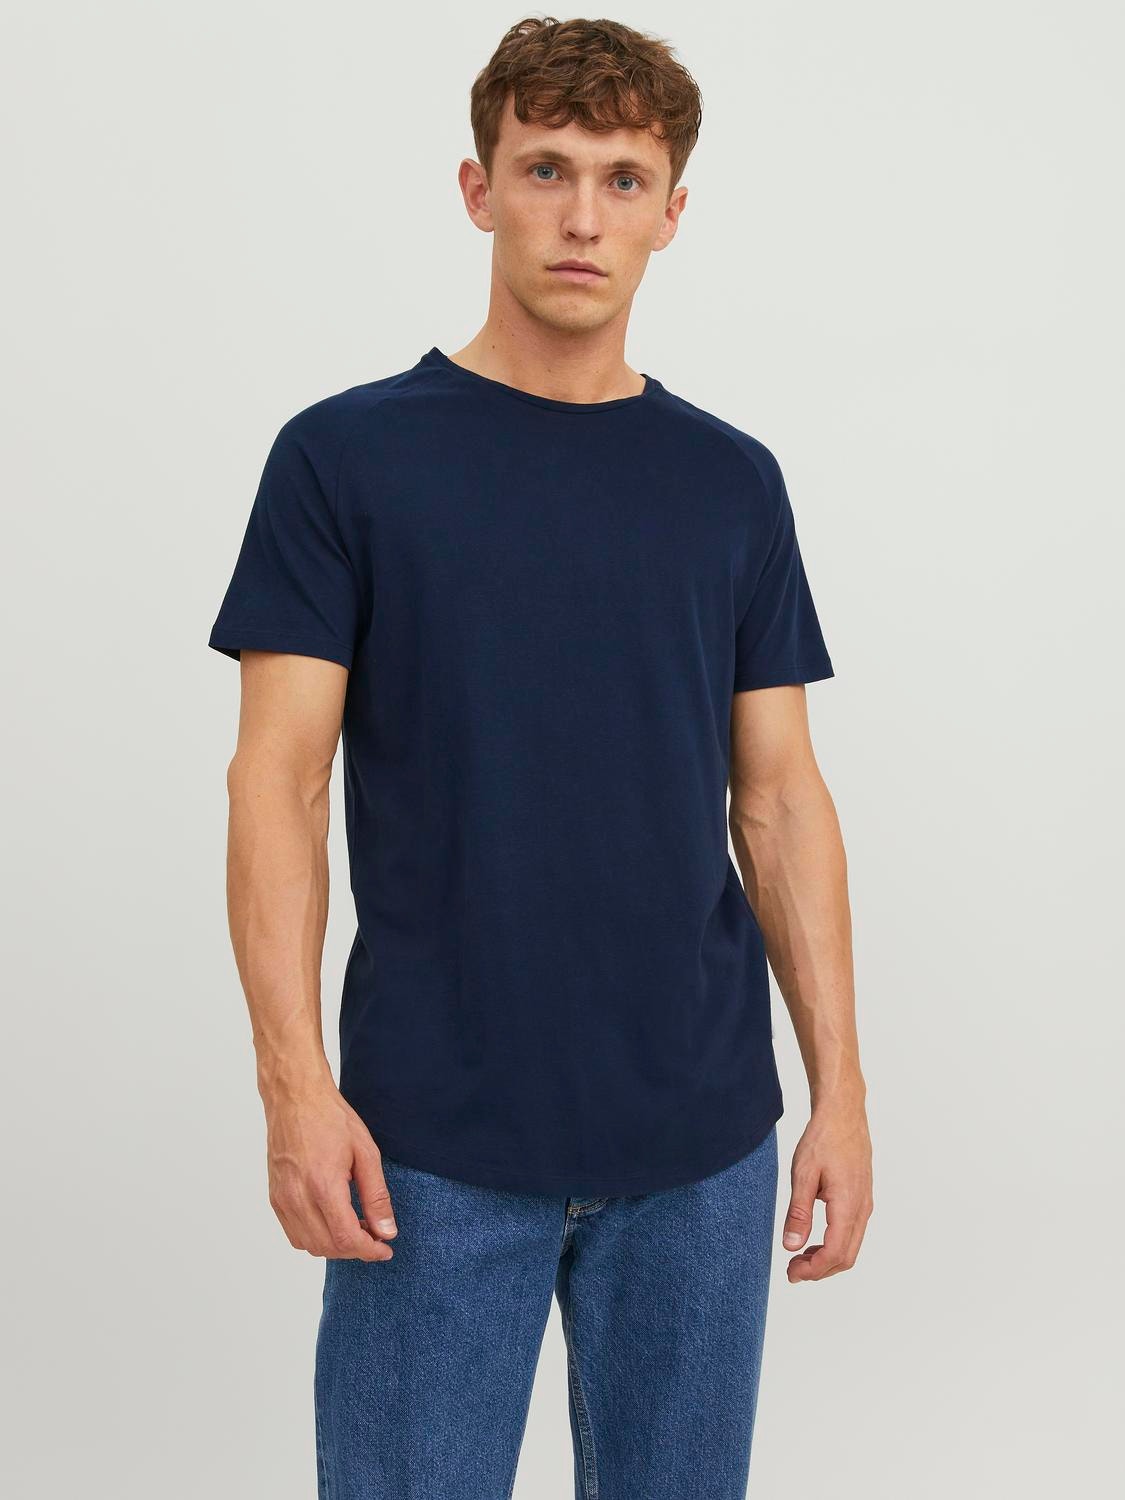 Jack & Jones T-shirt Semplice Girocollo -Navy Blazer - 12164936